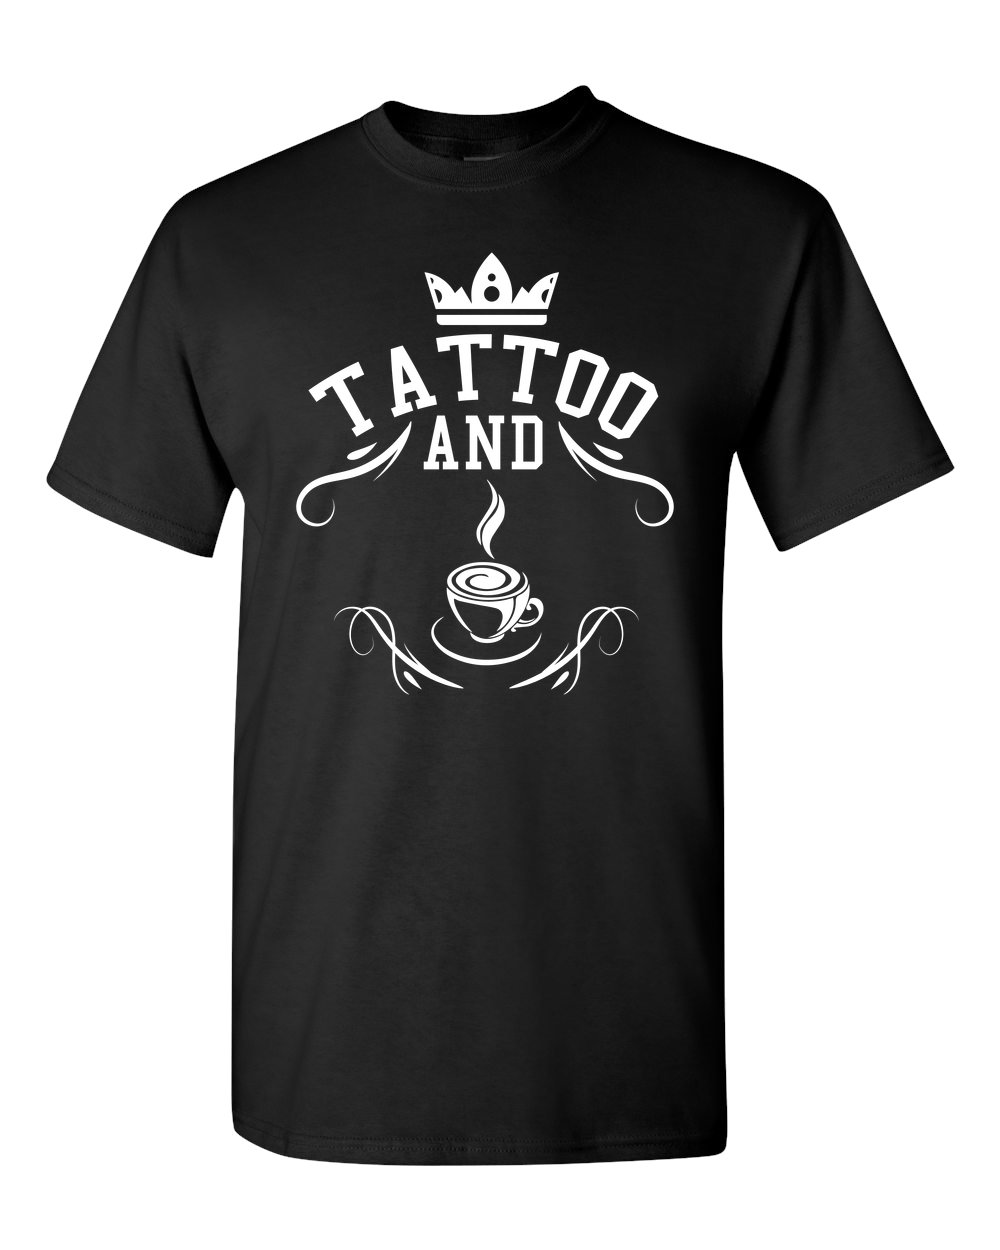 Tattoo and Coffee - Short-Sleeve Unisex T-Shirt